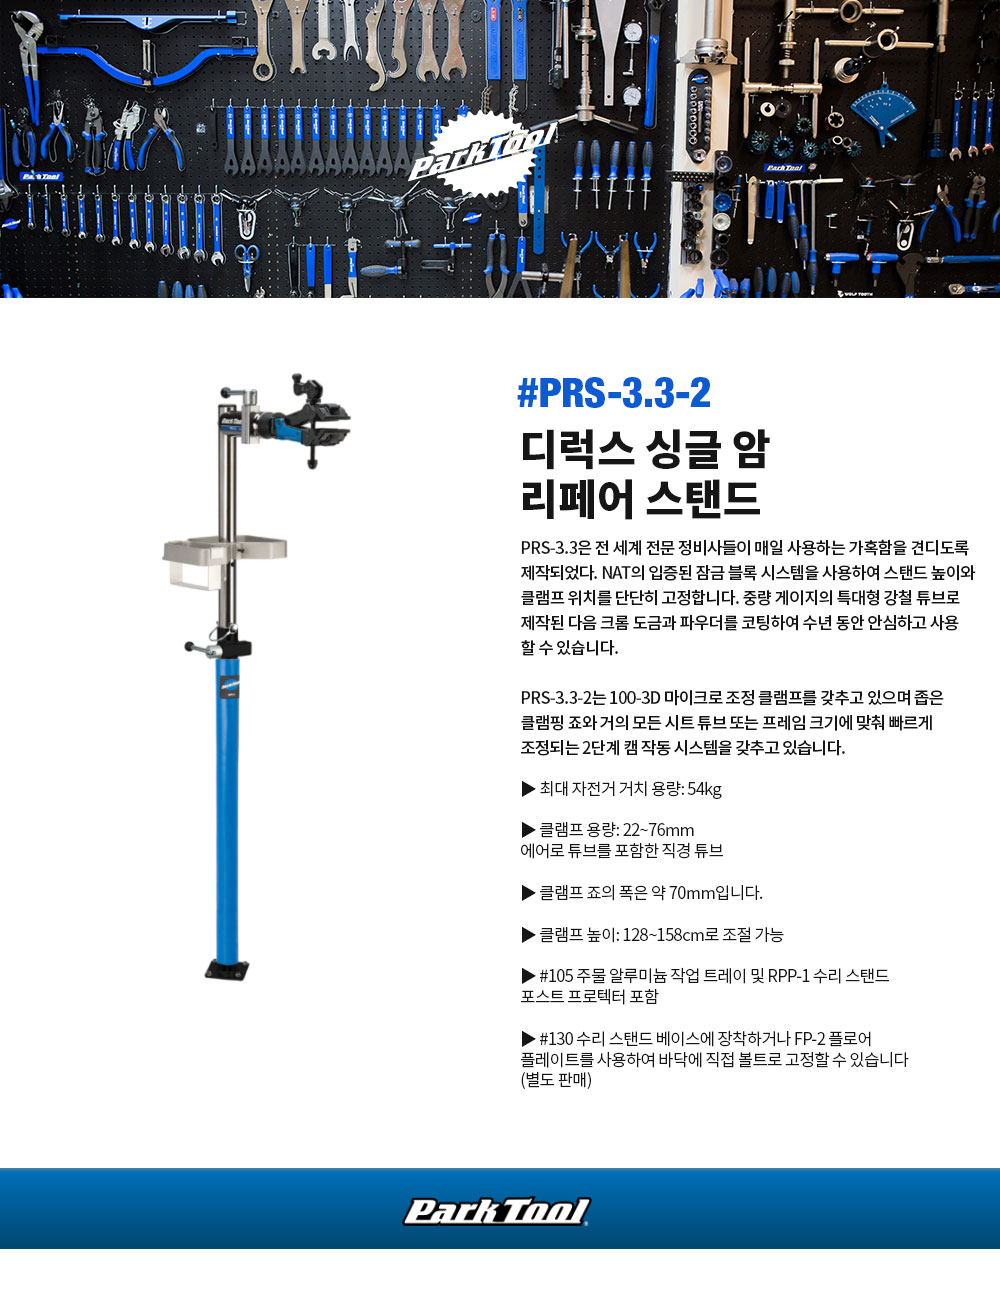 ParkTool PRS-3.3 Deluxe Single Arm Repair Stand